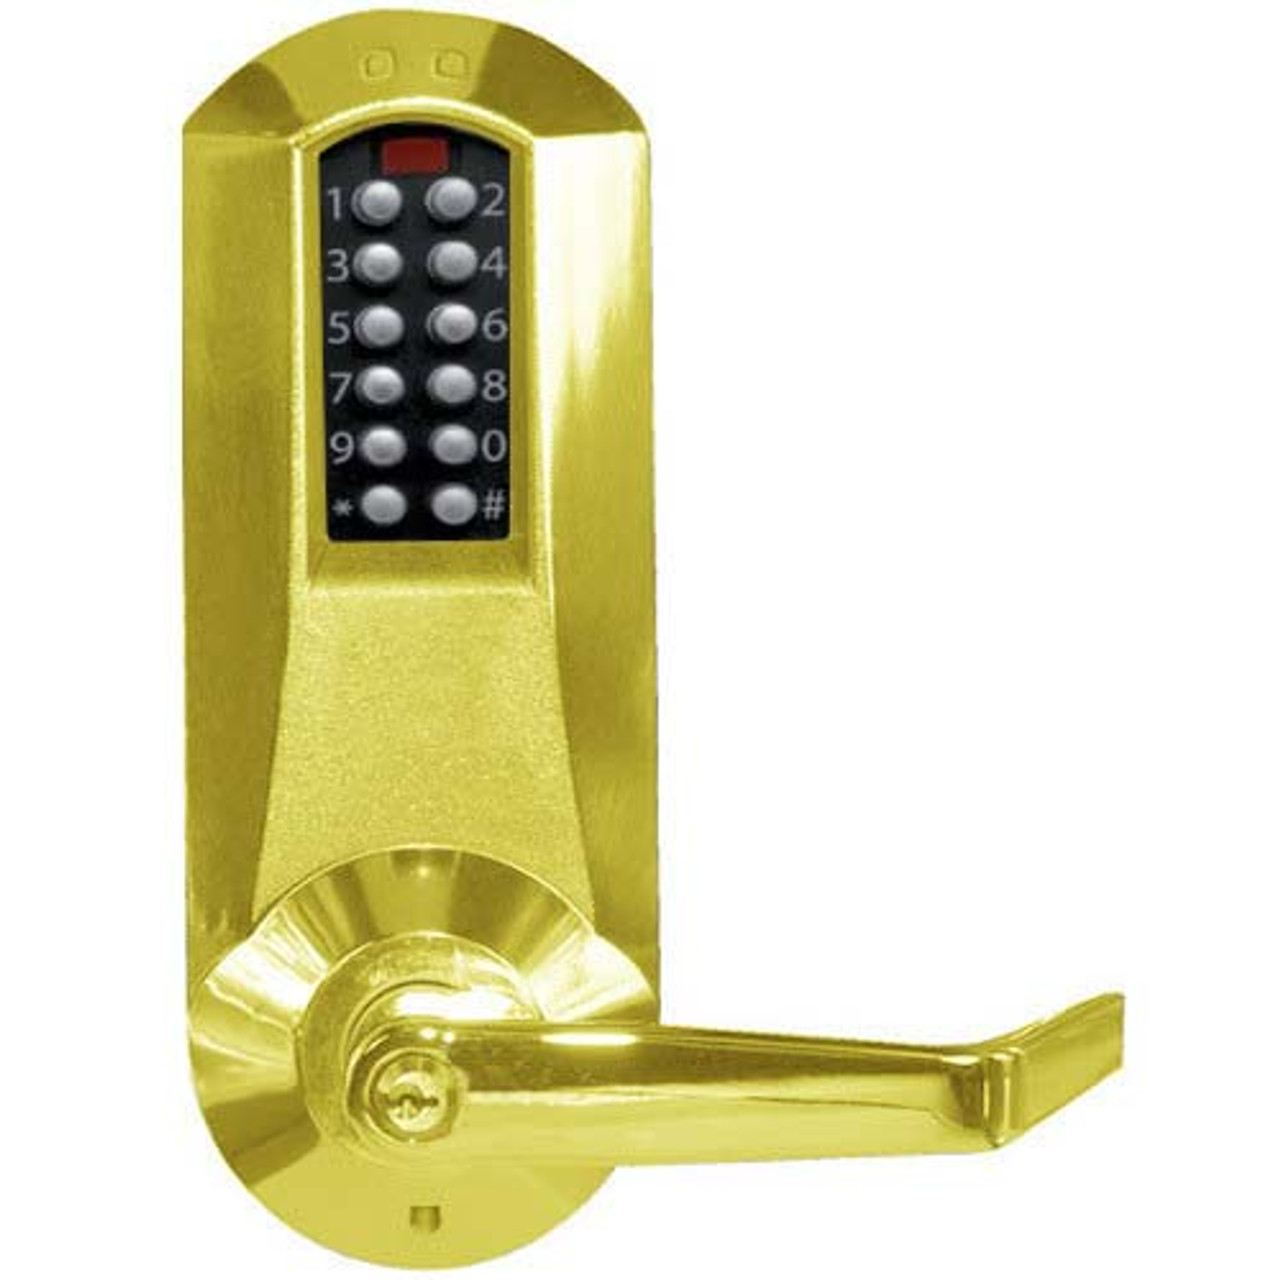 Eplex Pushbutton Lock in Bright Brass Finish